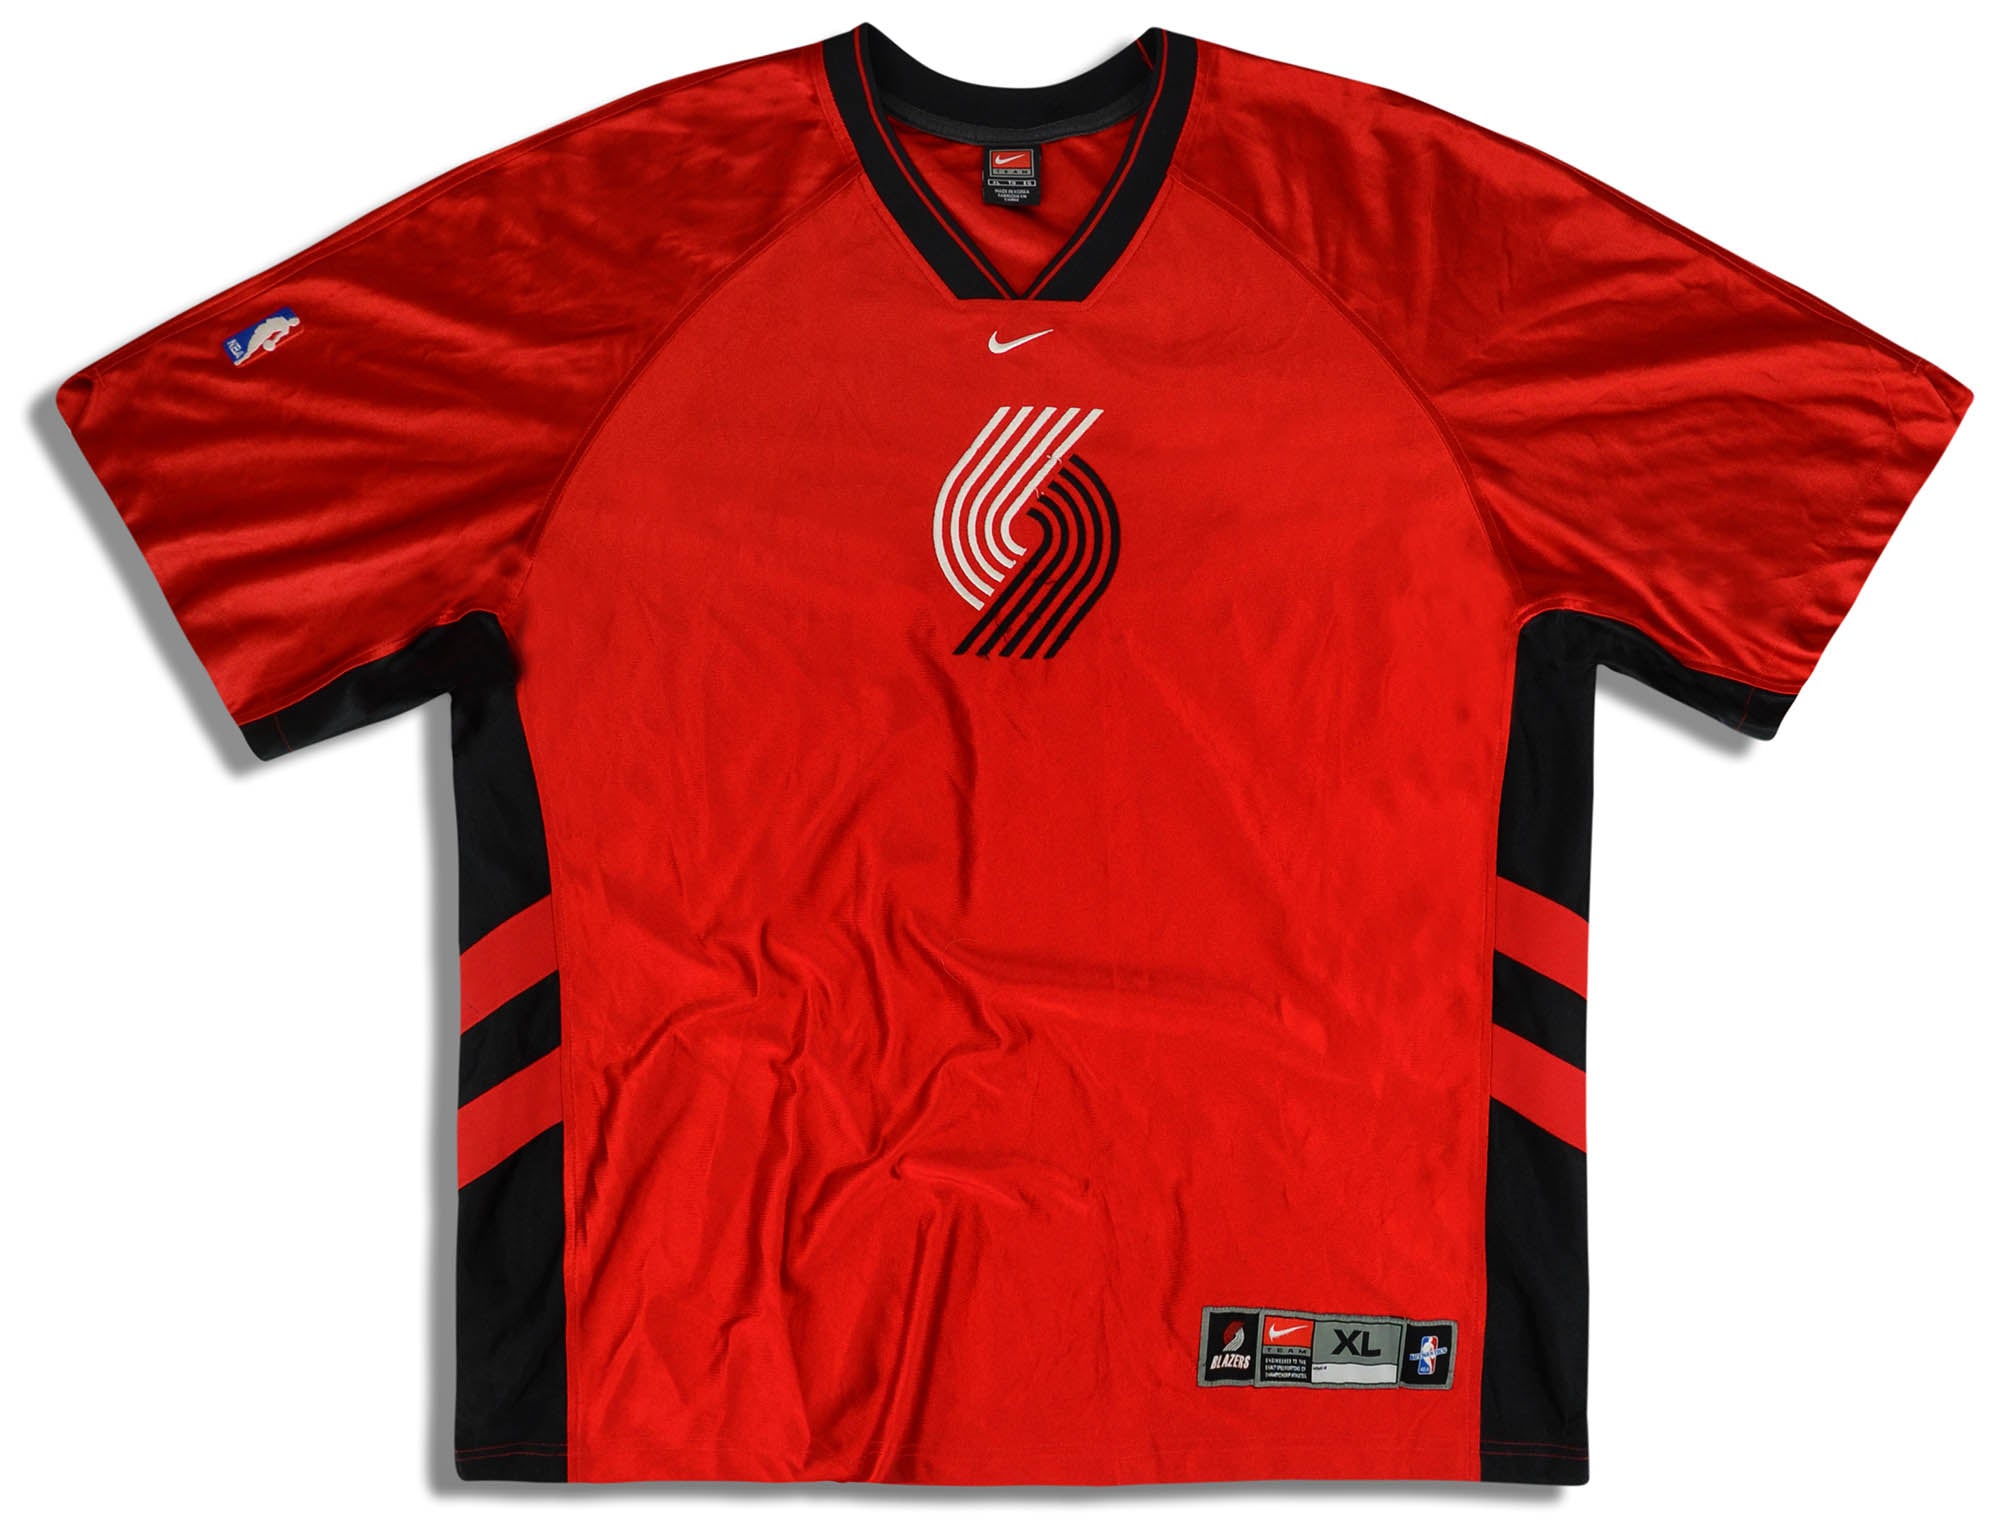 Adidas Cleveland Cavaliers NBA Shooting Jersey Shirt Warm Up Sz L